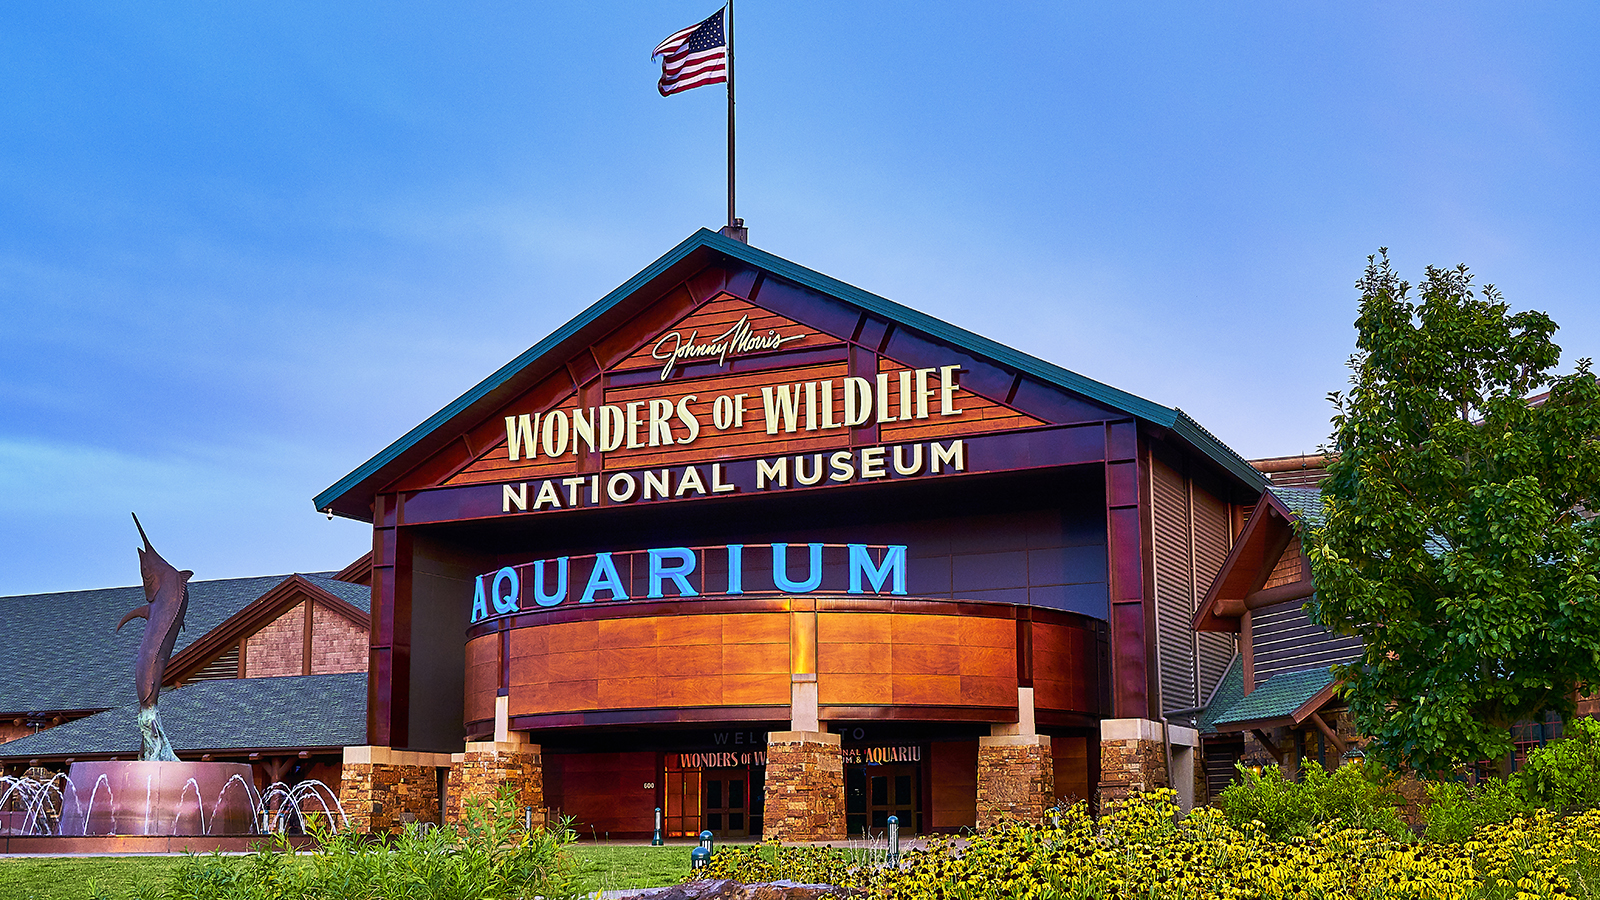 Wonders of Wildlife National Museum and Aquarium in Springfield, Missouri